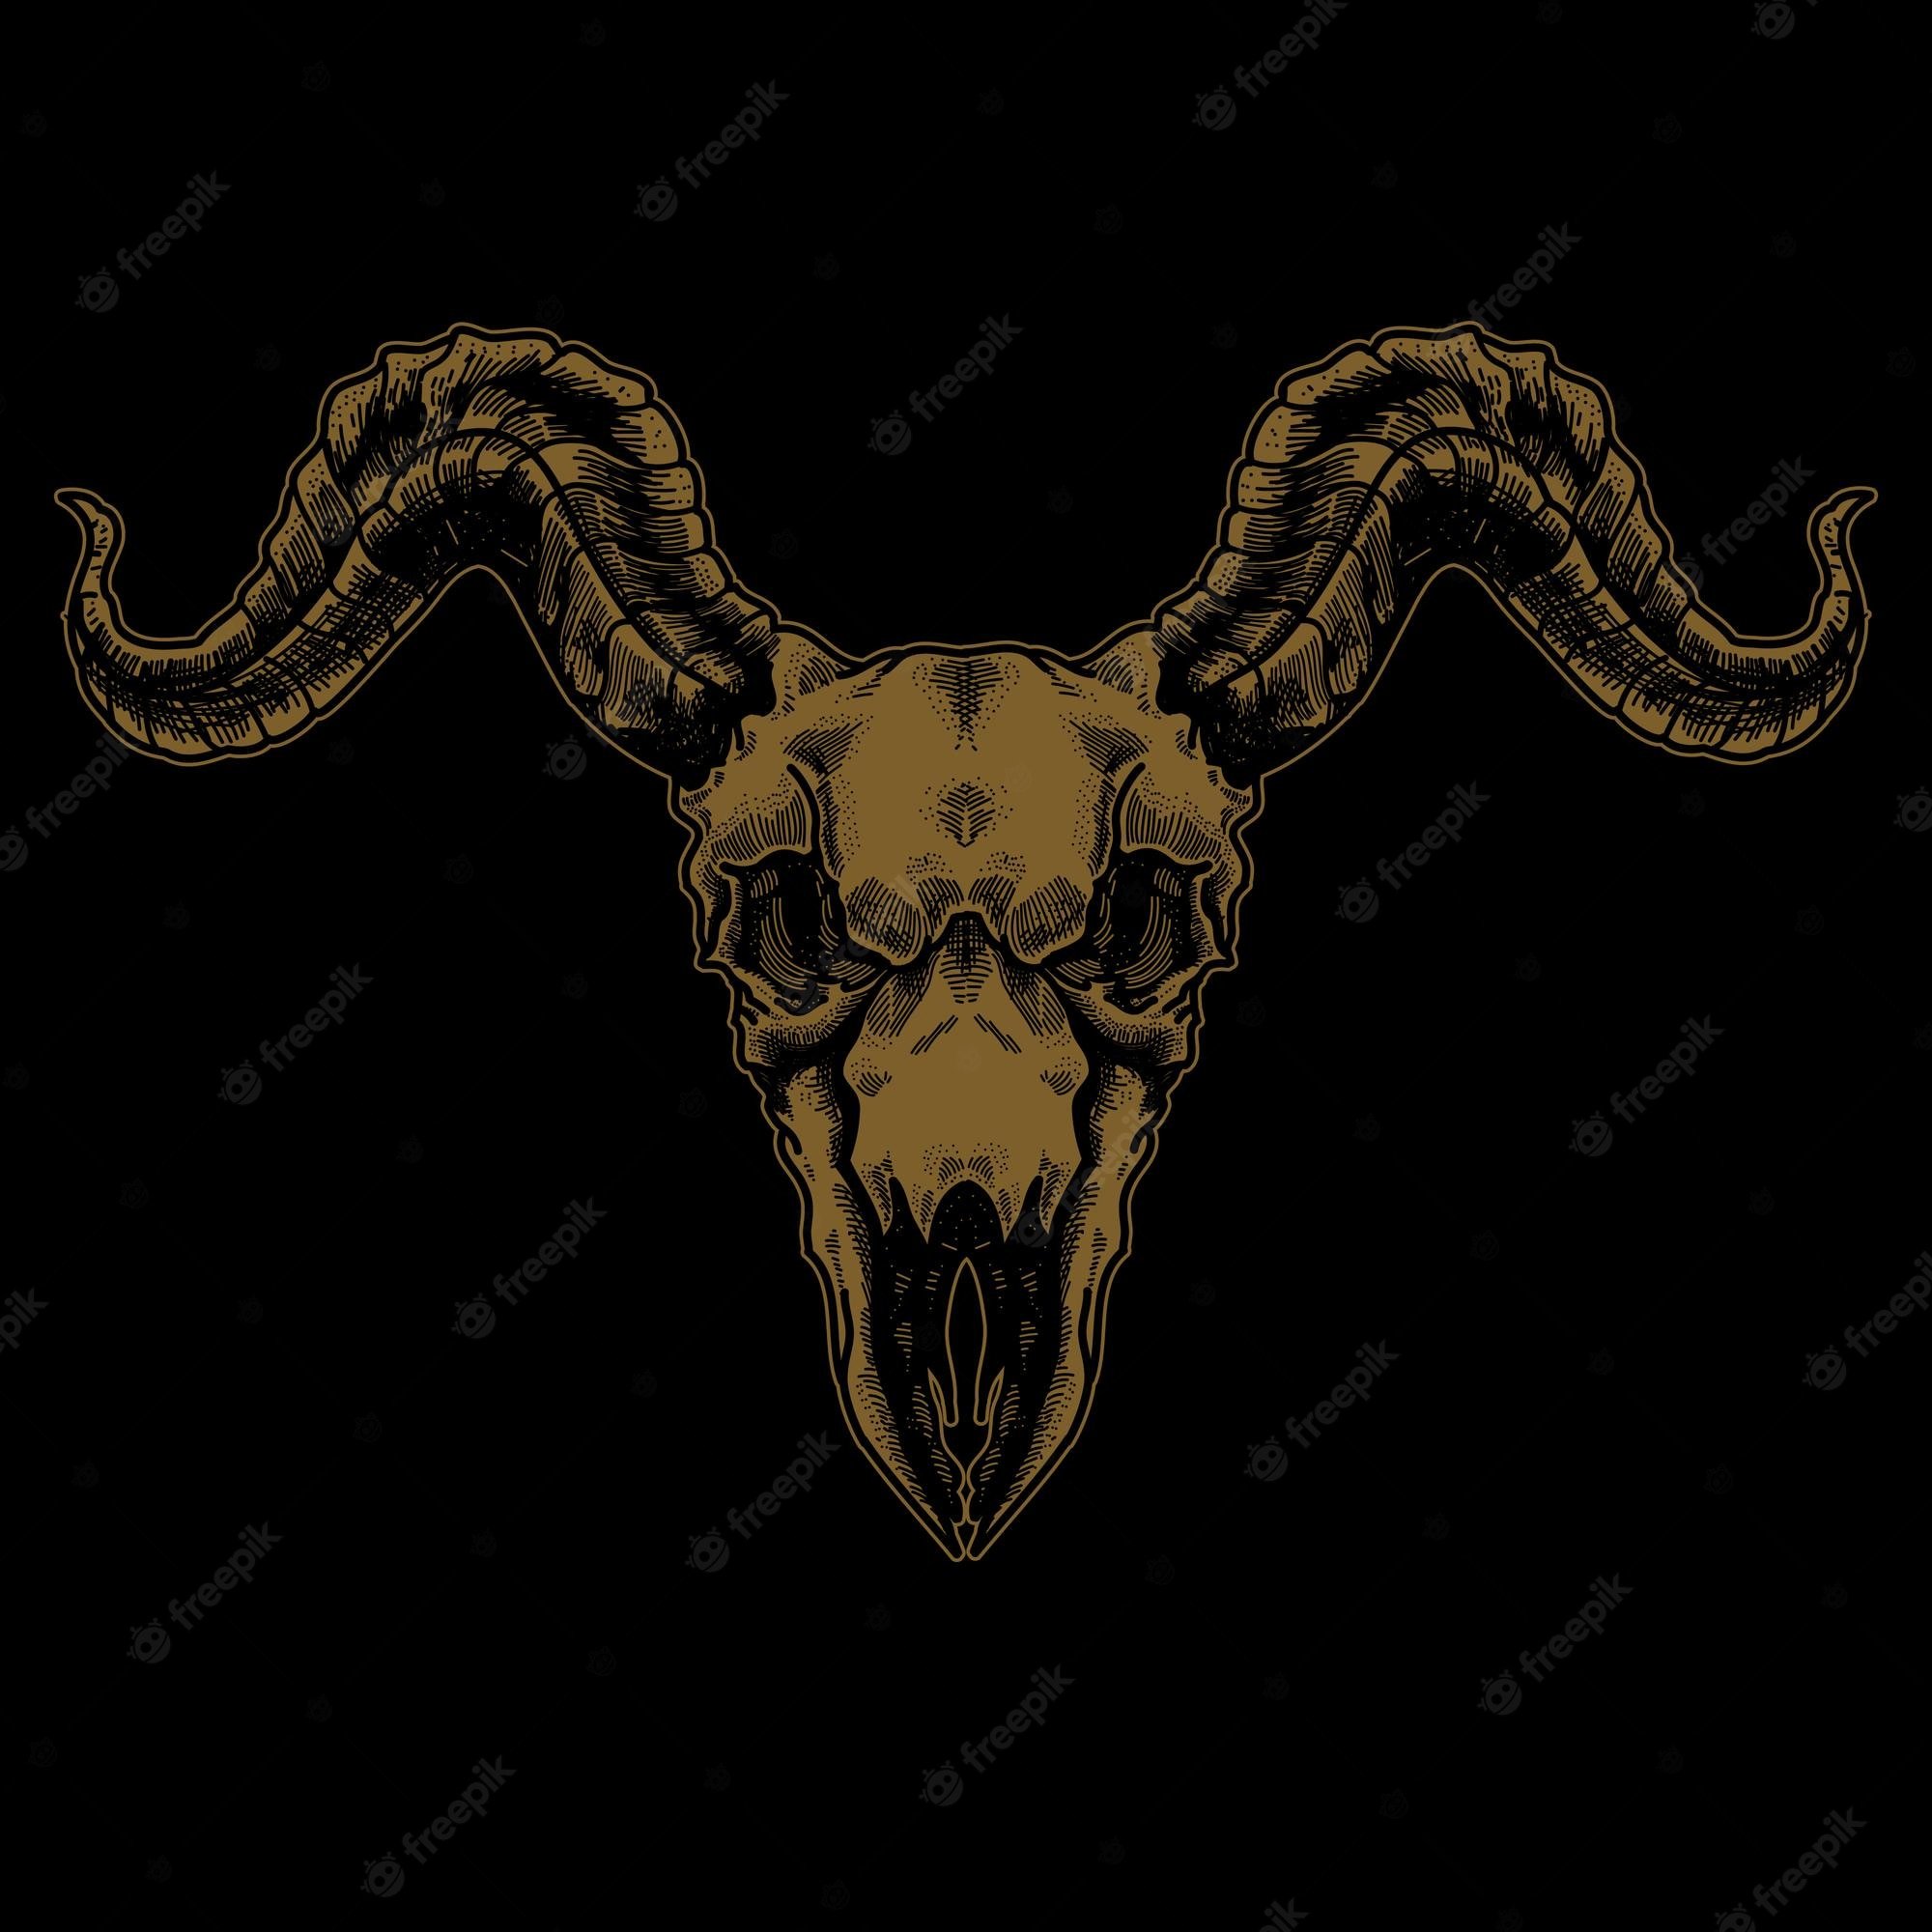 Ram Skull Image